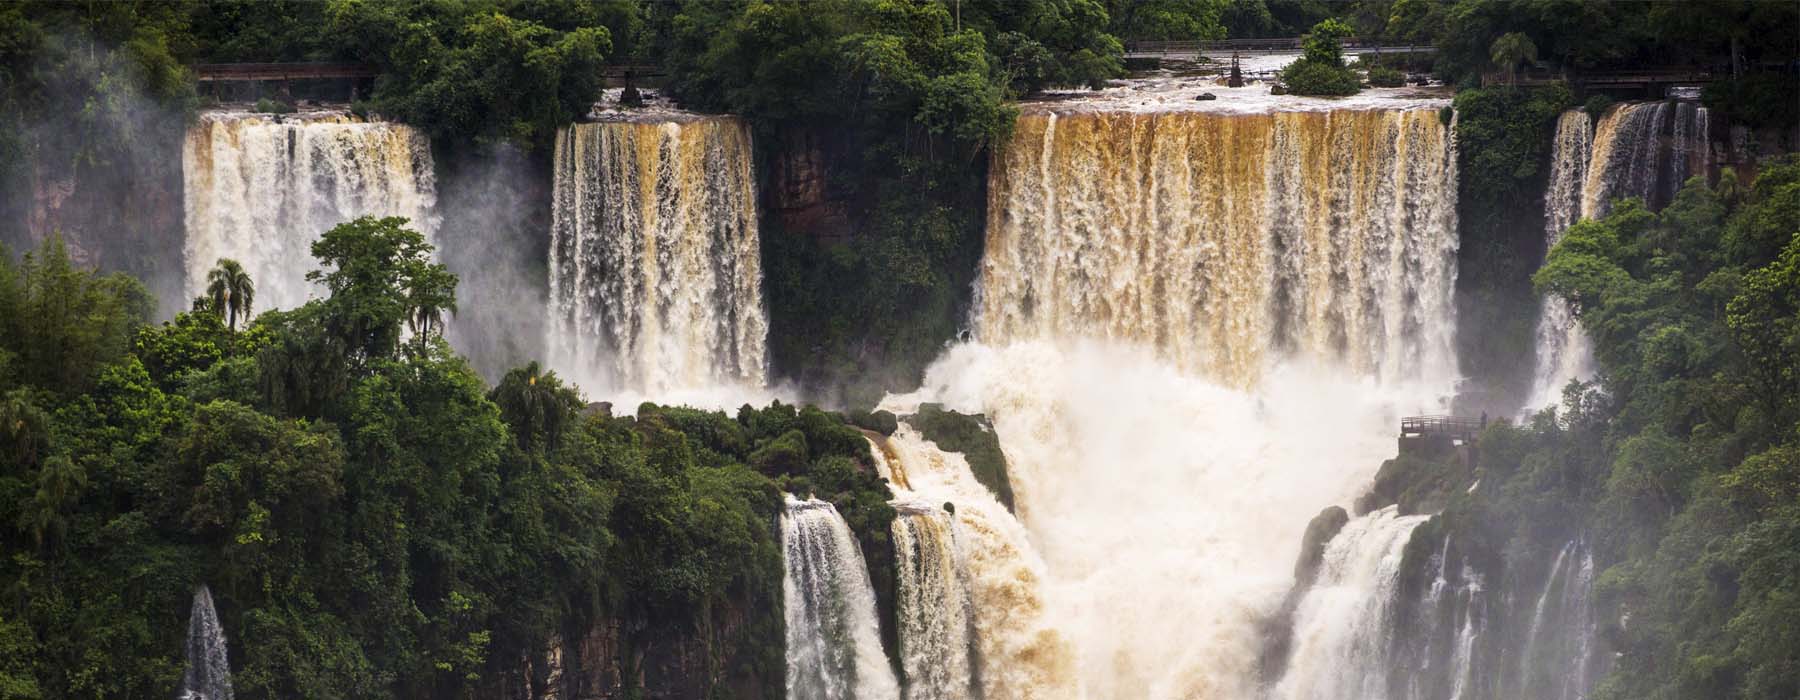 Iguaçu Falls<br class="hidden-md hidden-lg" /> Holidays